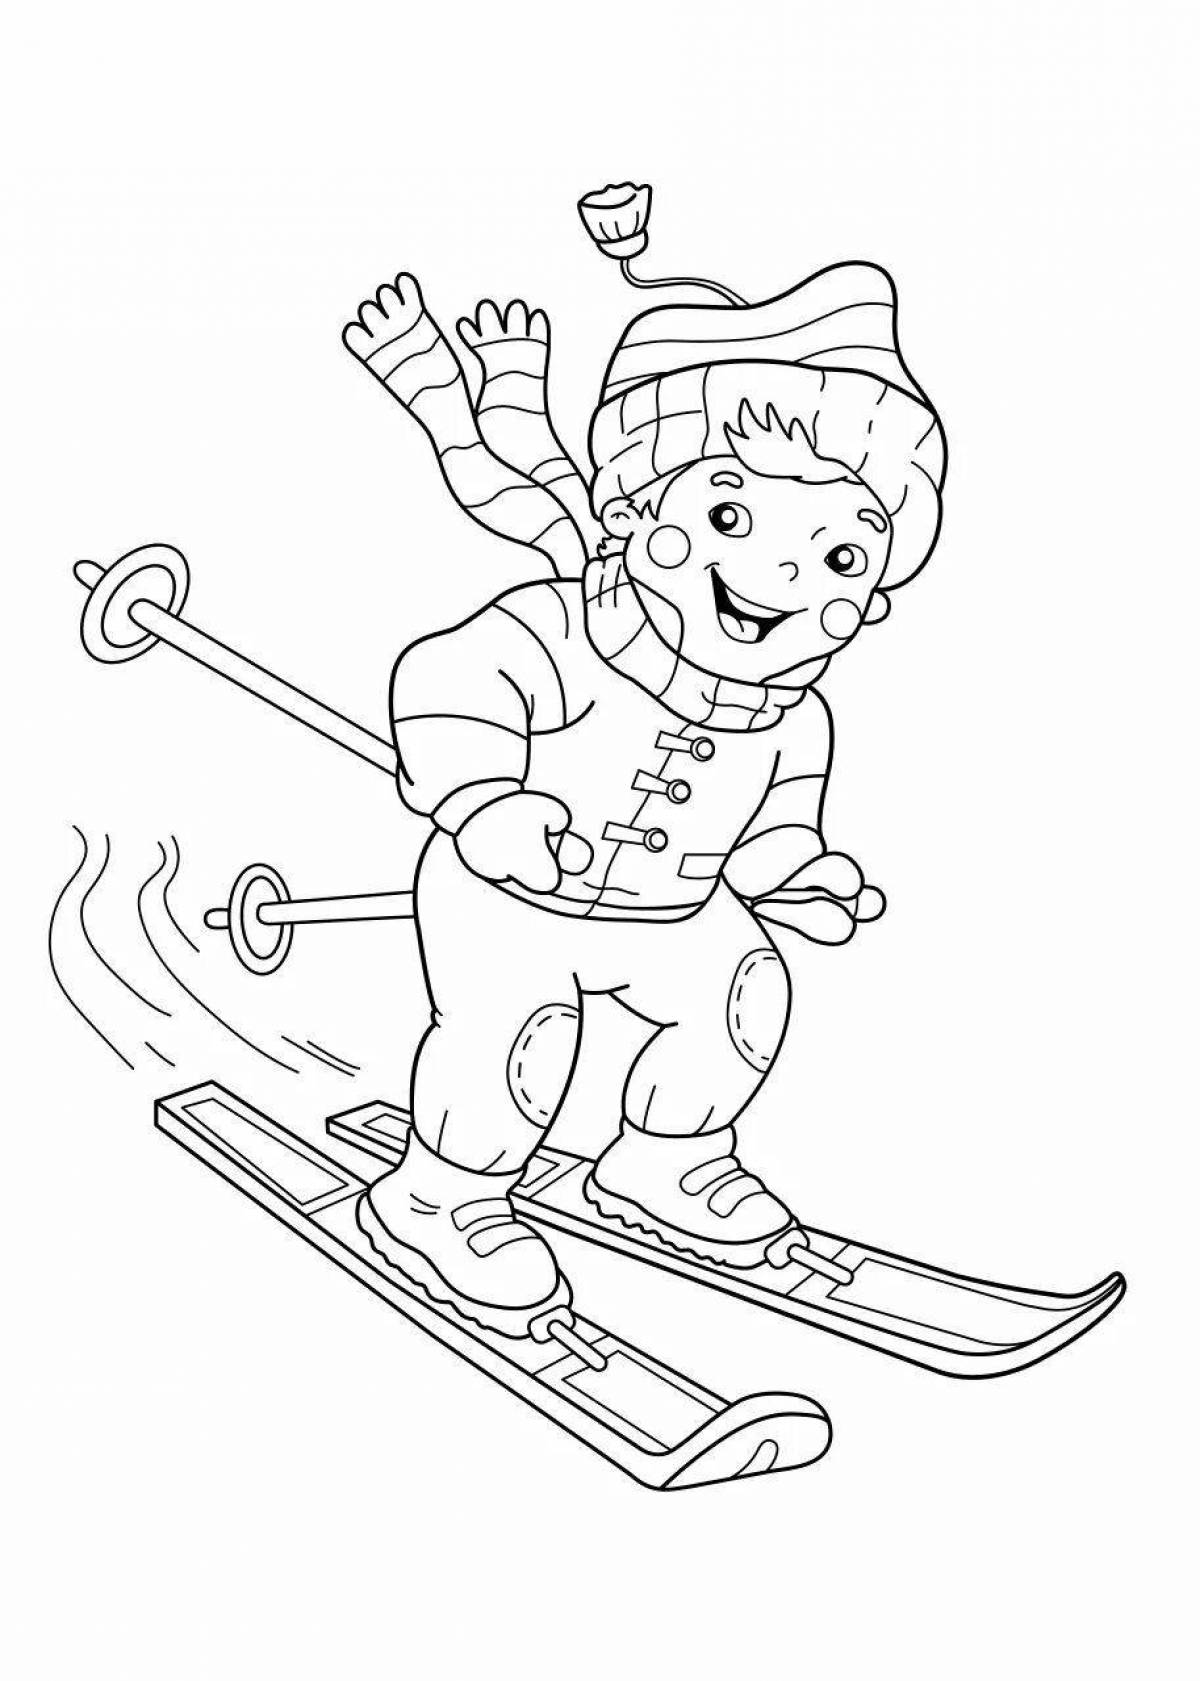 Катание на лыжах : Раскраски зима